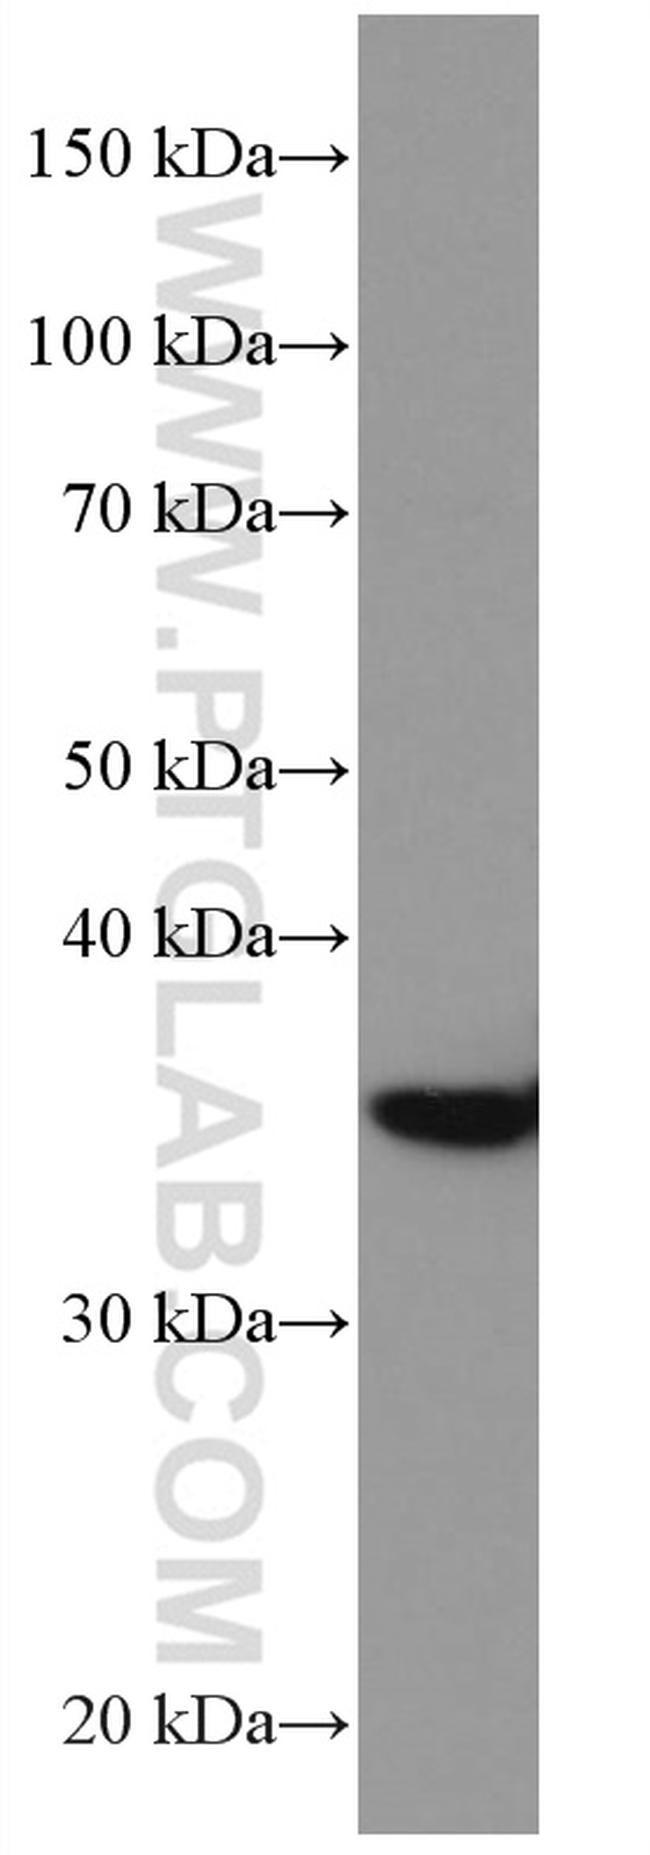 DMC1 Antibody in Western Blot (WB)